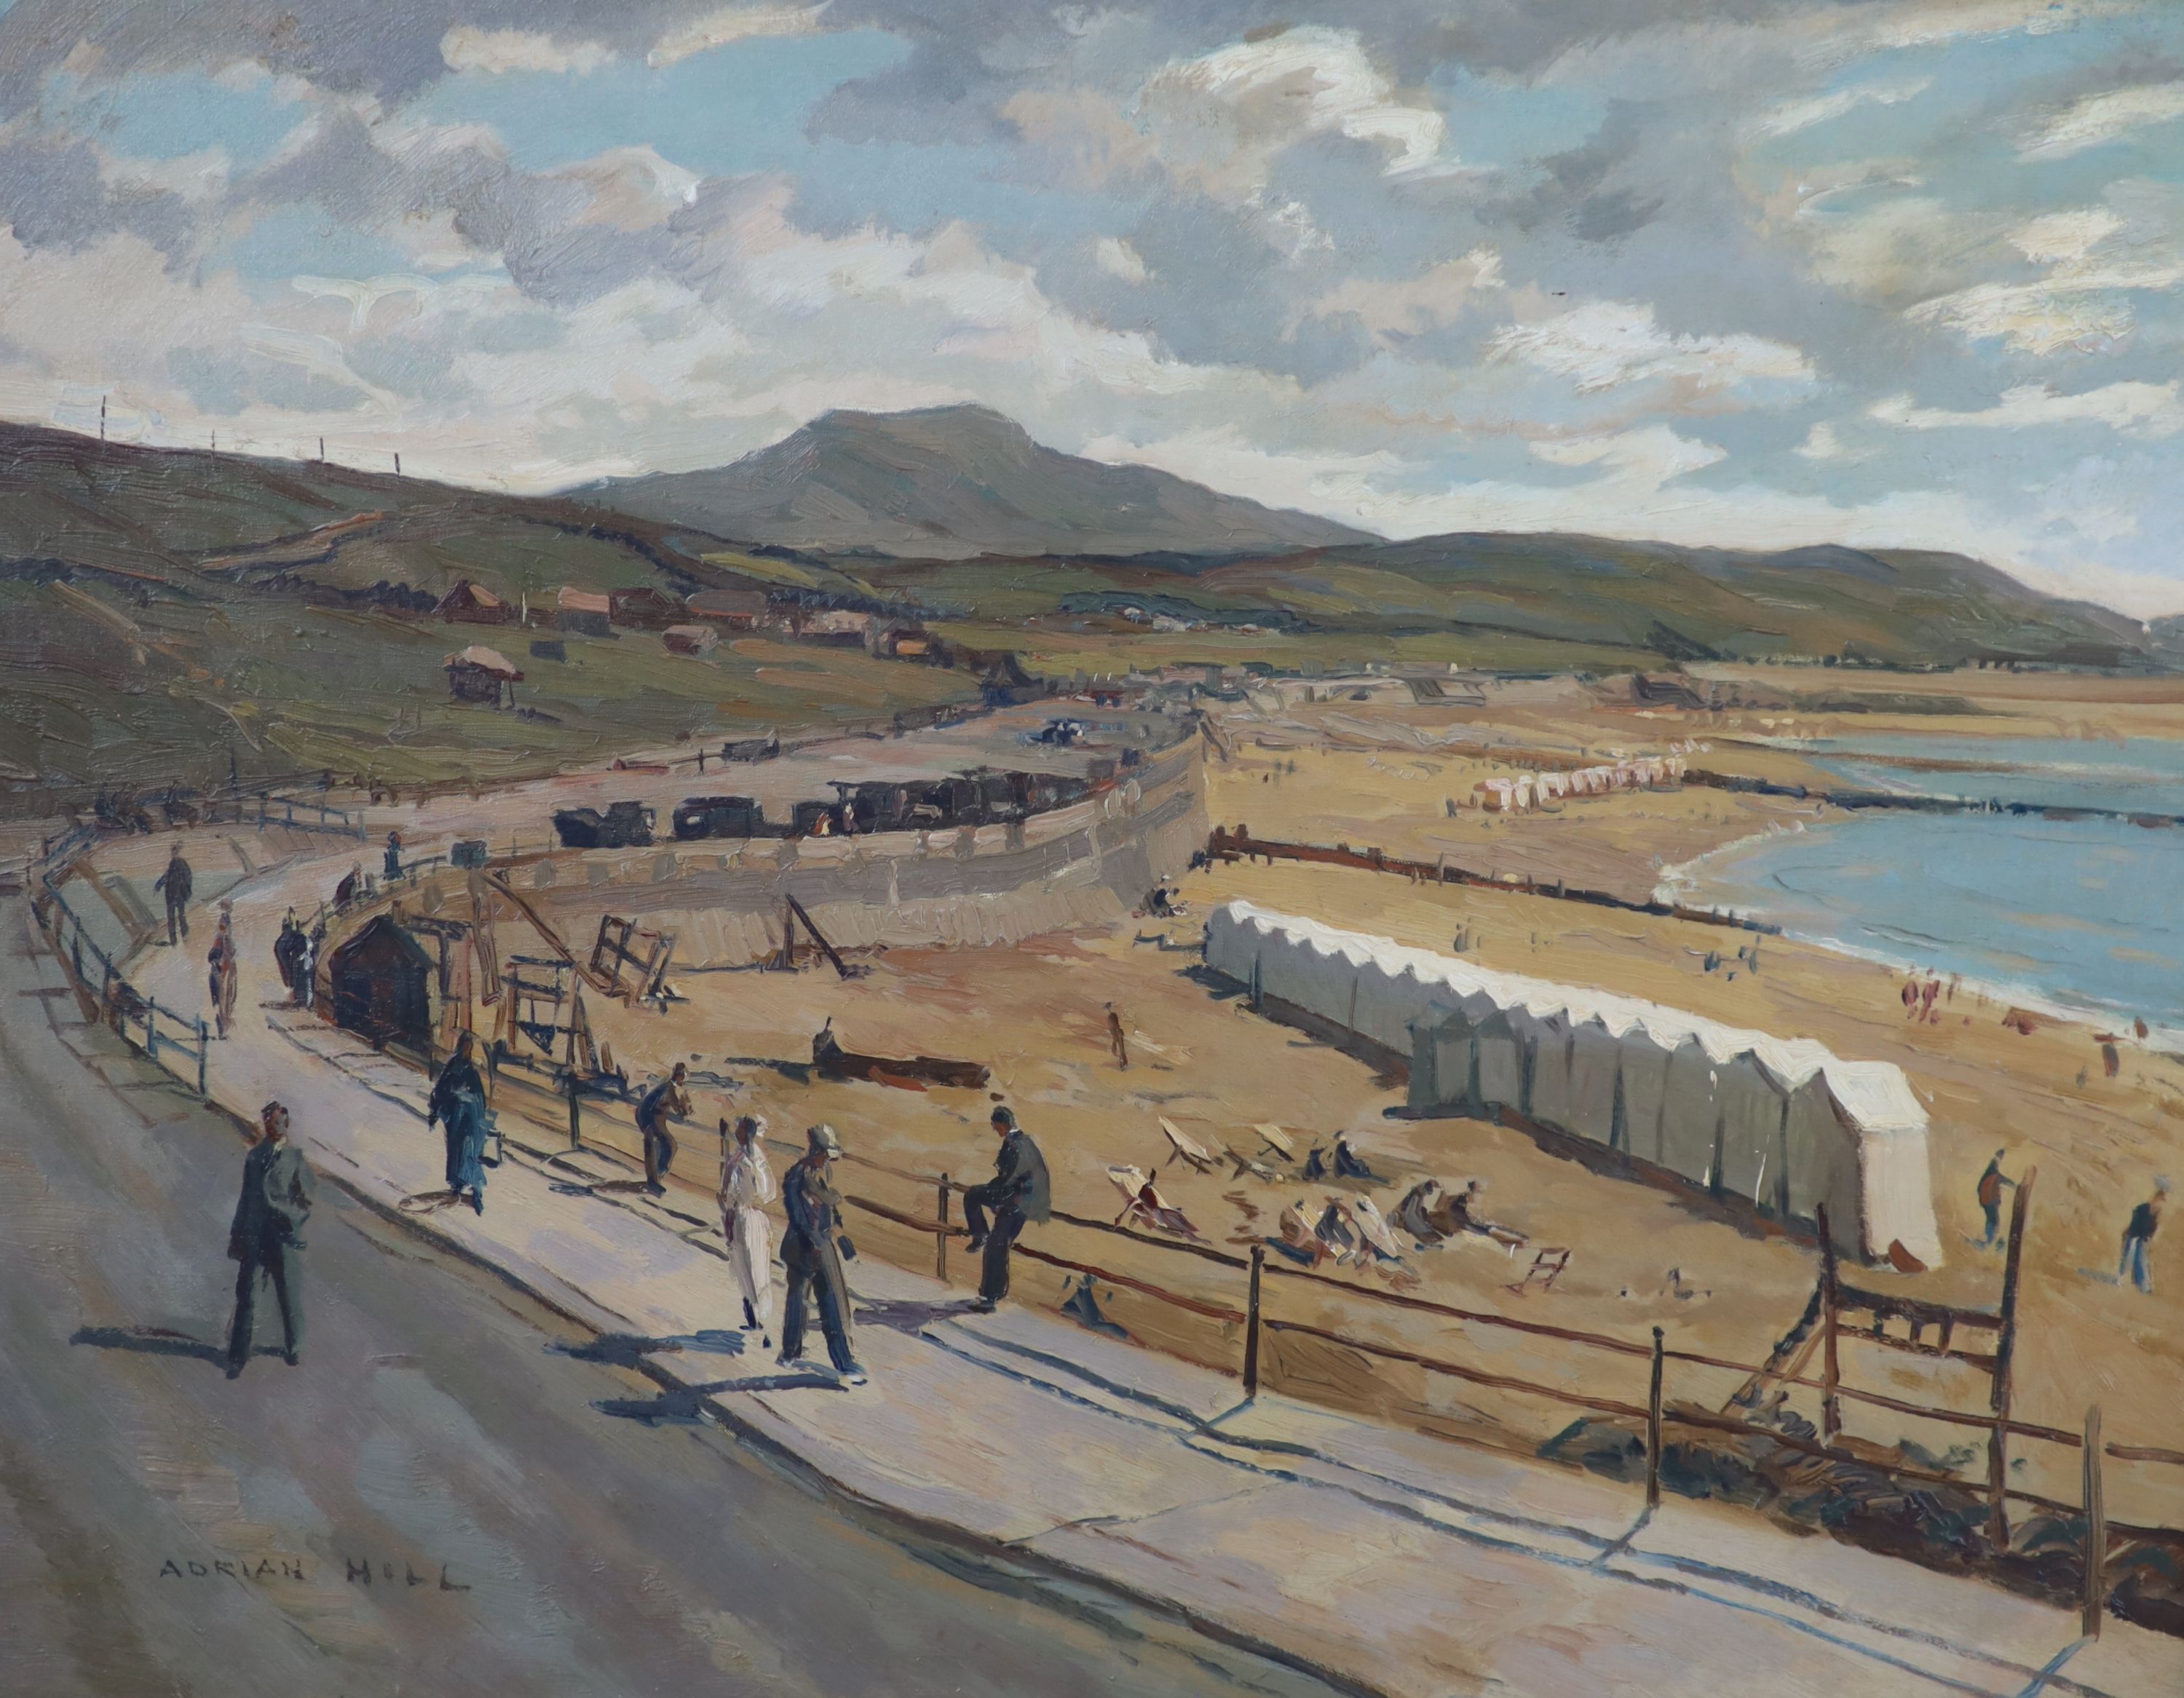 Adrian Hill (1895-1977), North country beach scene, Oil on canvas, 69 x 88cm.